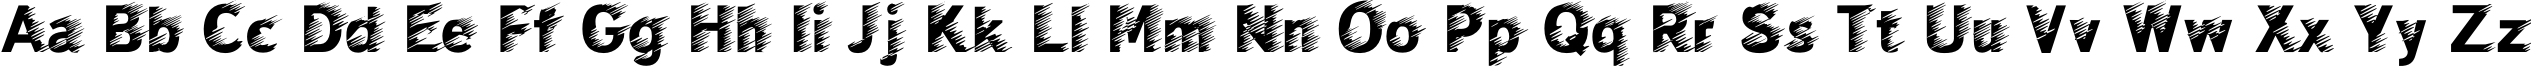 Пример написания английского алфавита шрифтом Wind